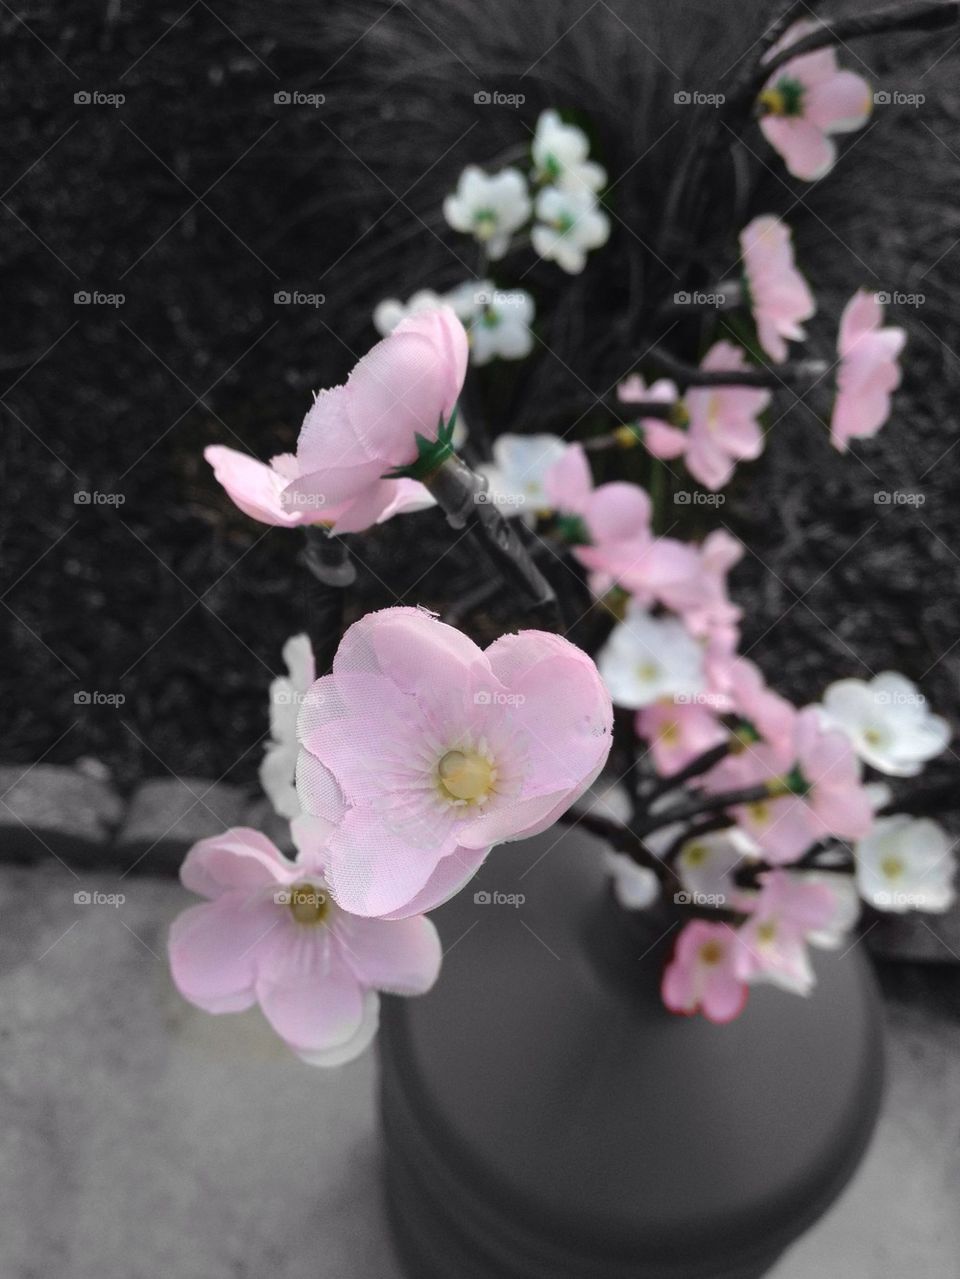 pink flower white pot by brendon.hivner